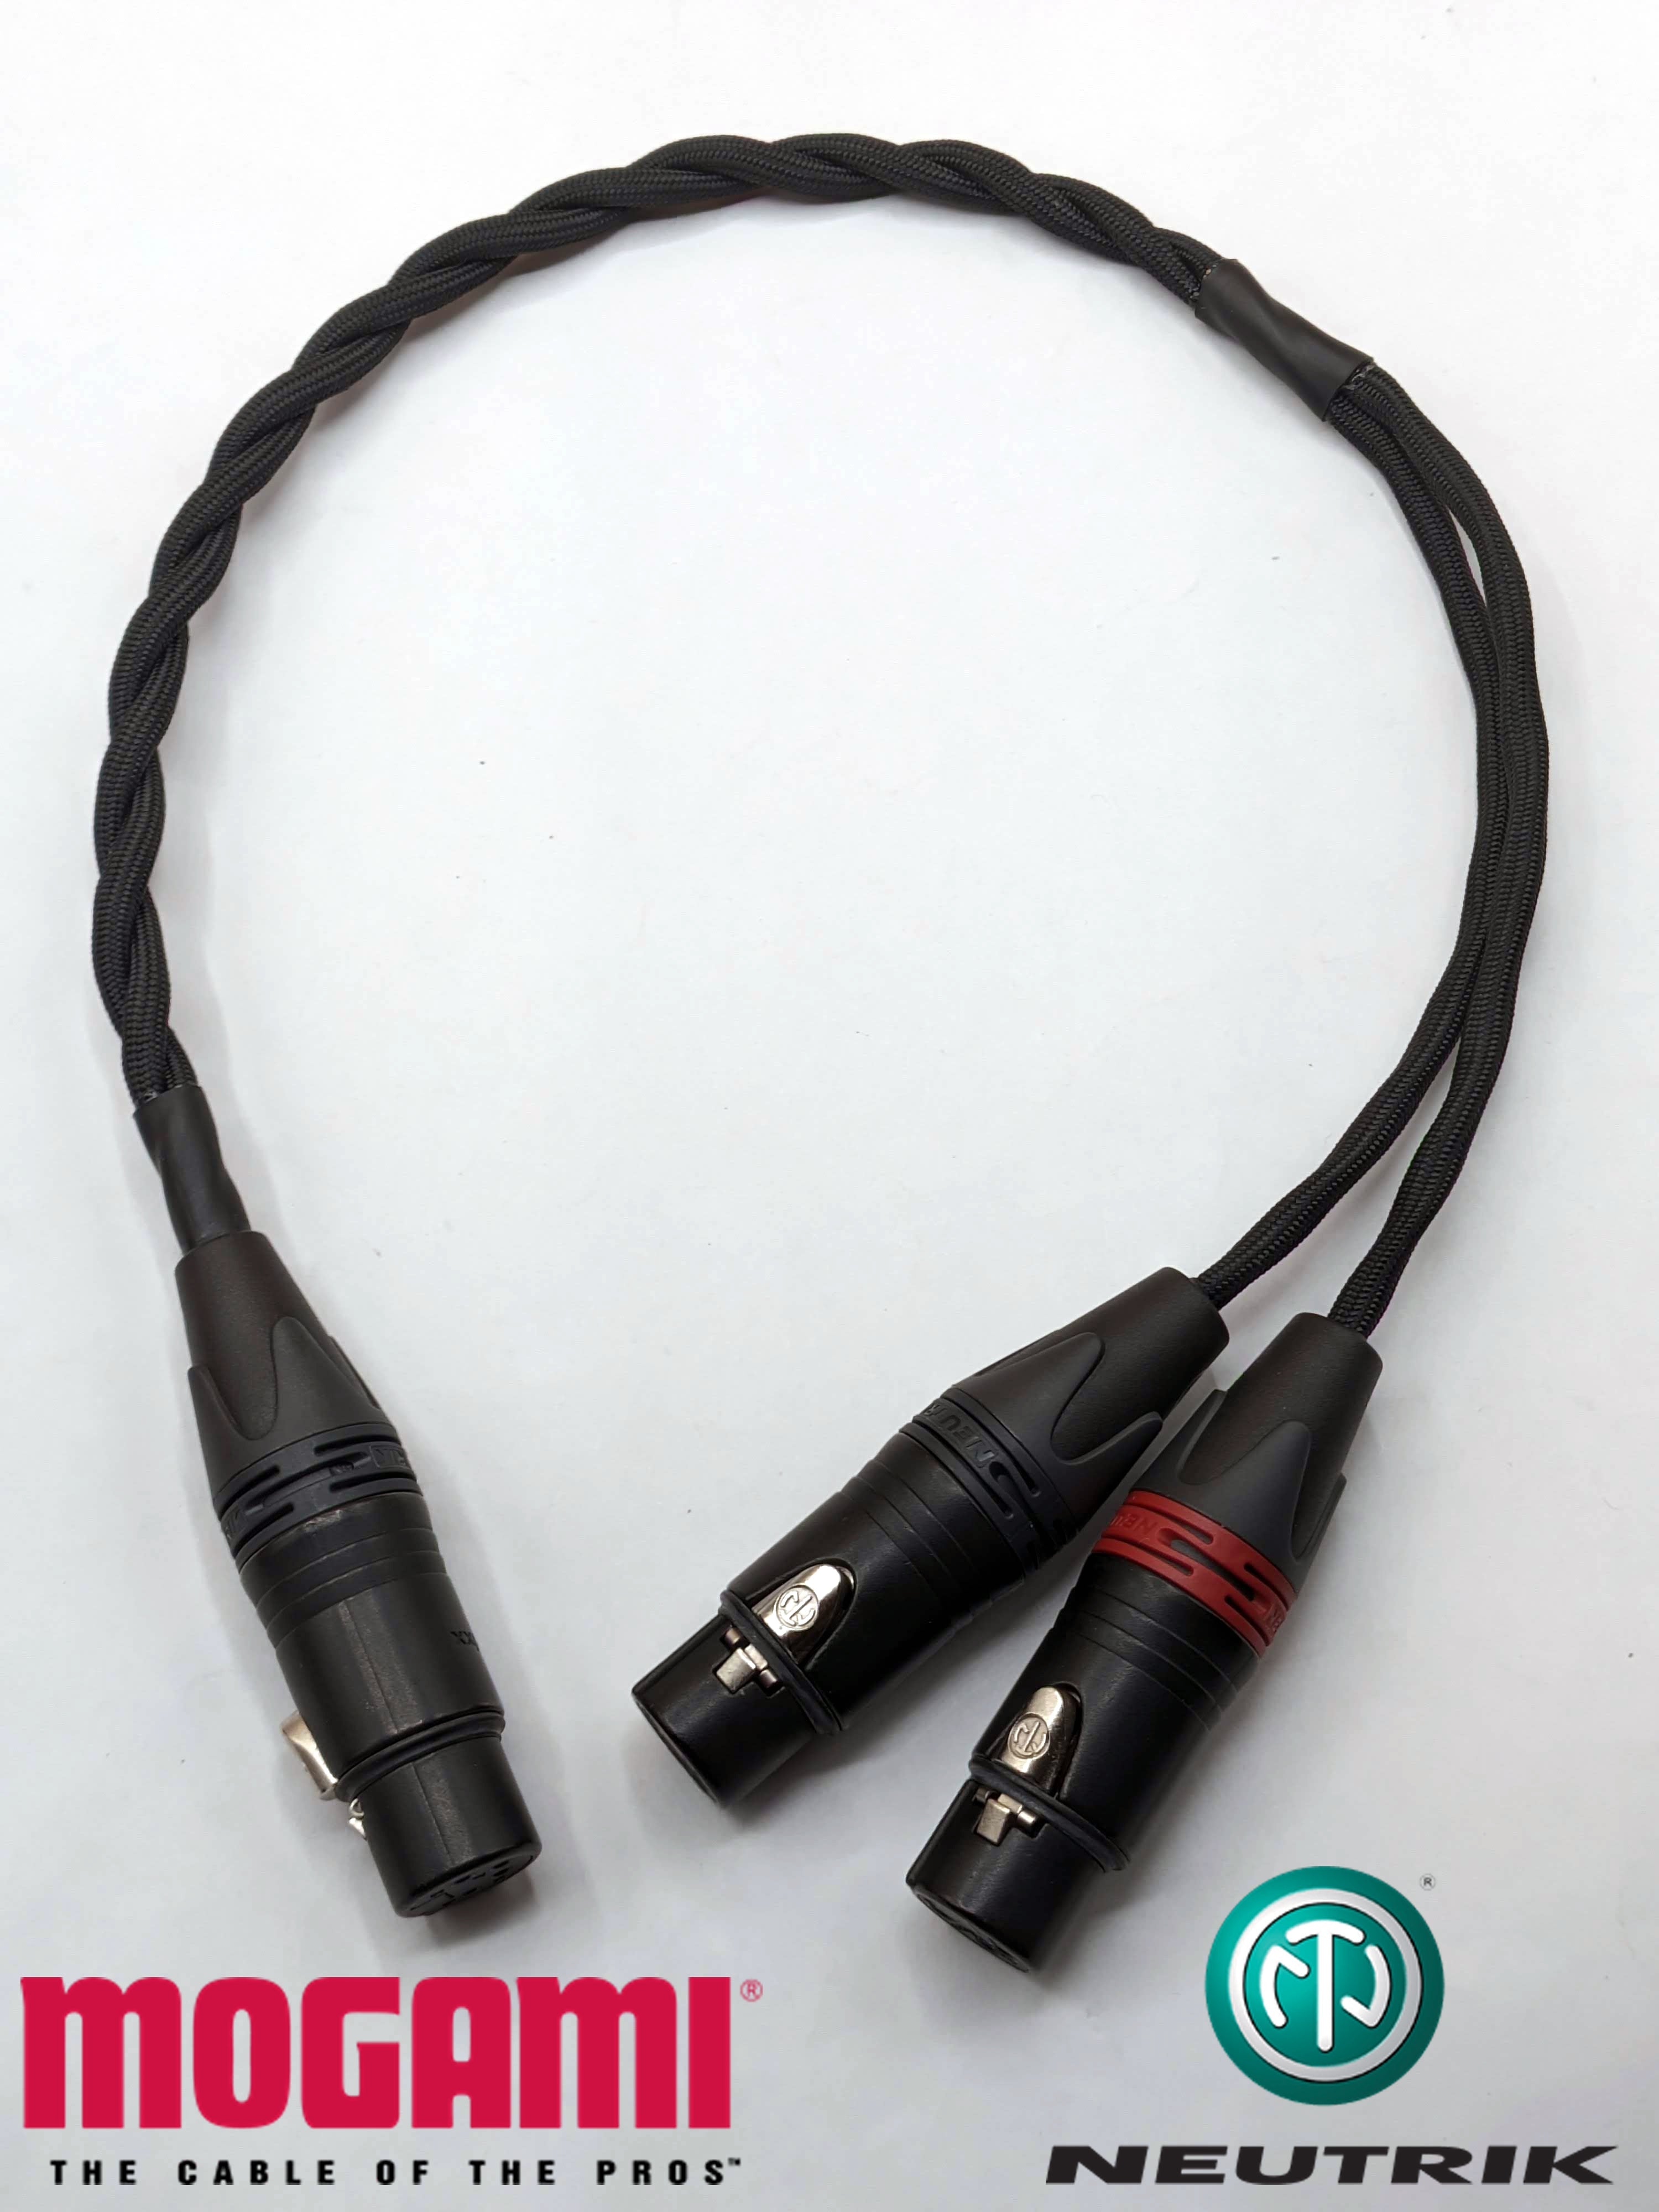 Adaptor Cable - Female 4 Pin XLR to Dual Female 3 Pin XLR - Mogami 26AWG